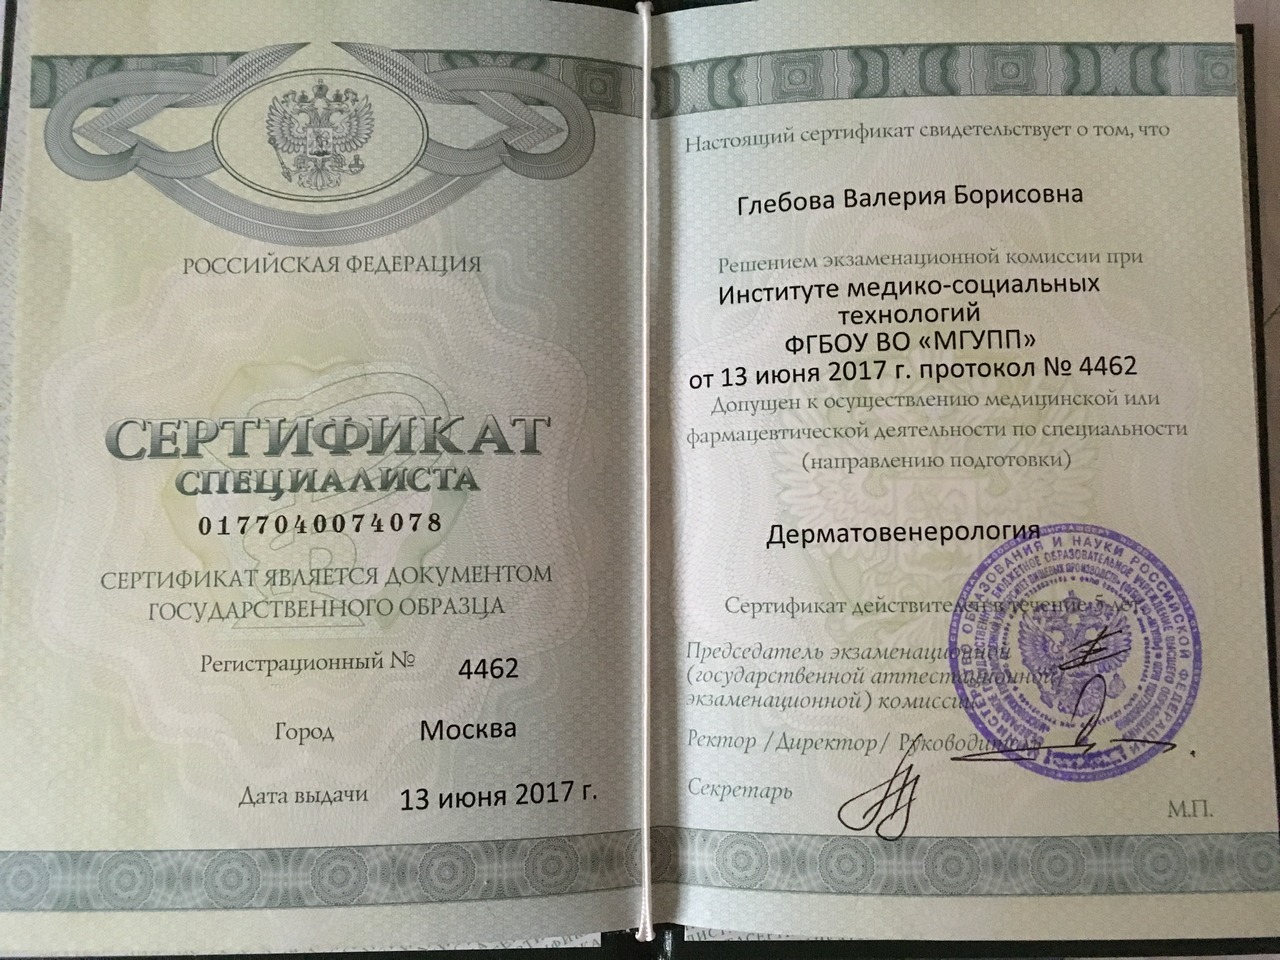 Сертификат Дерматовенерология Ямщикова Валерия Борисовна